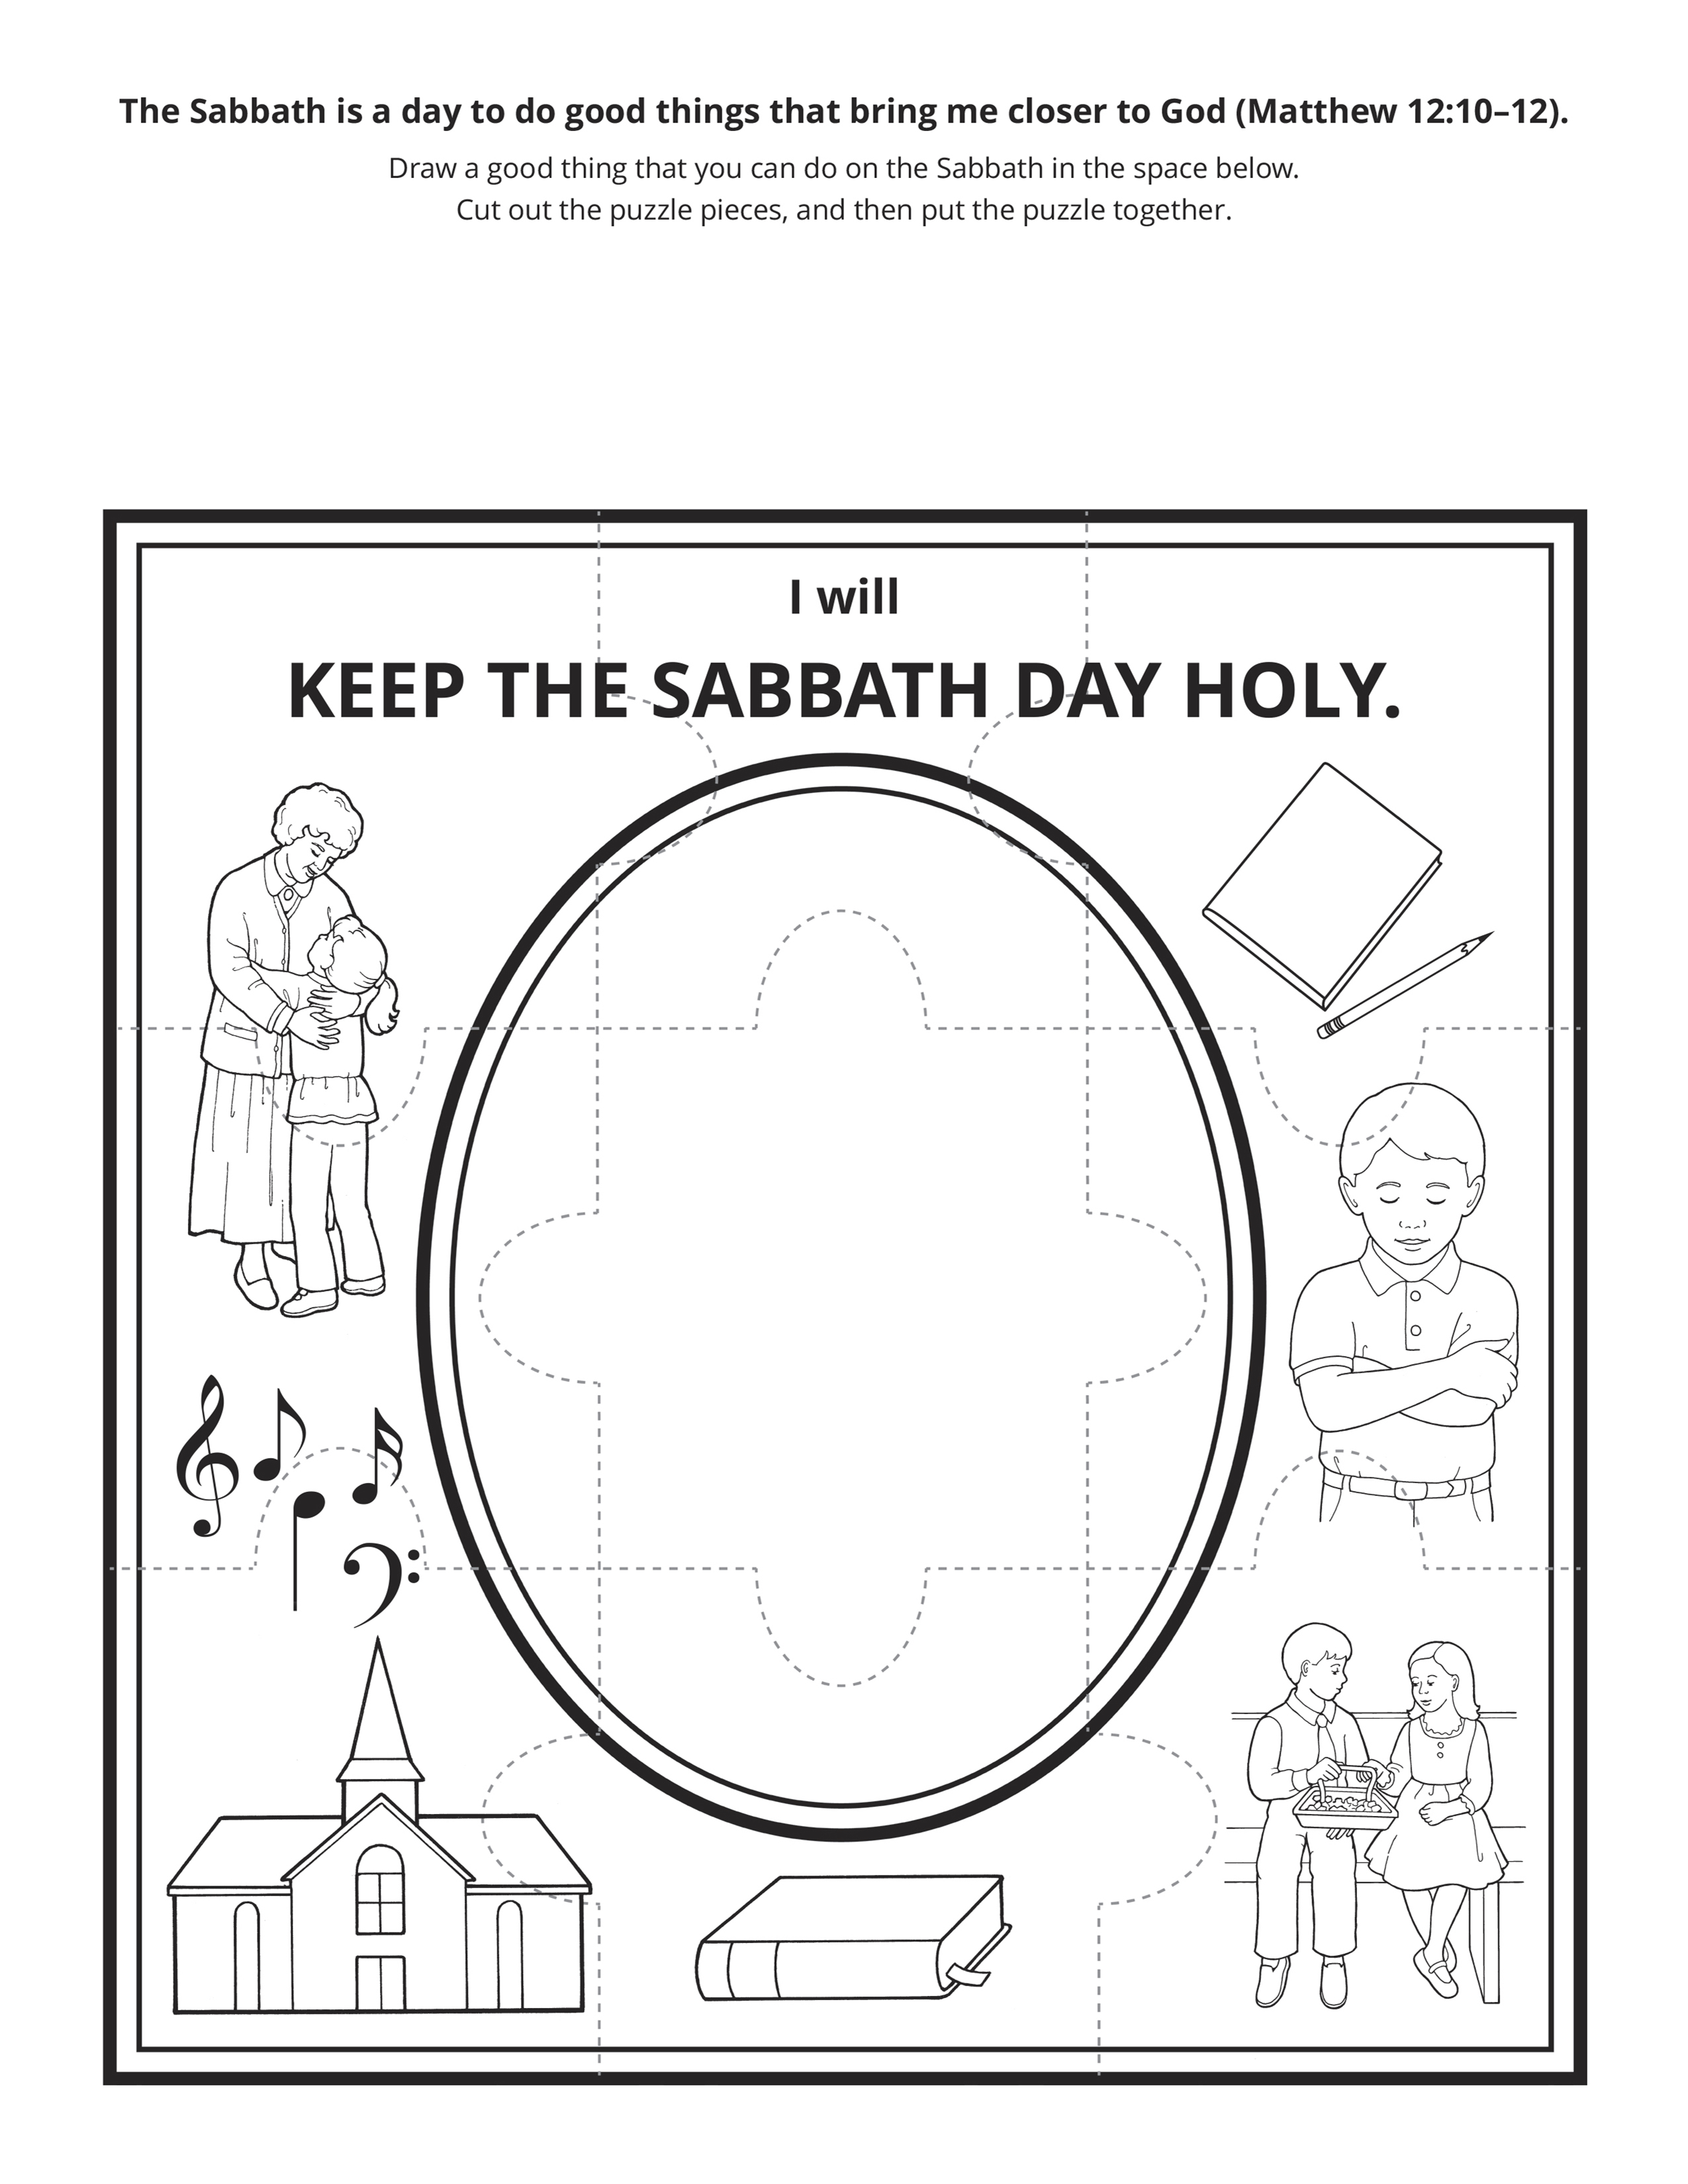 keep-the-sabbath-day-holy